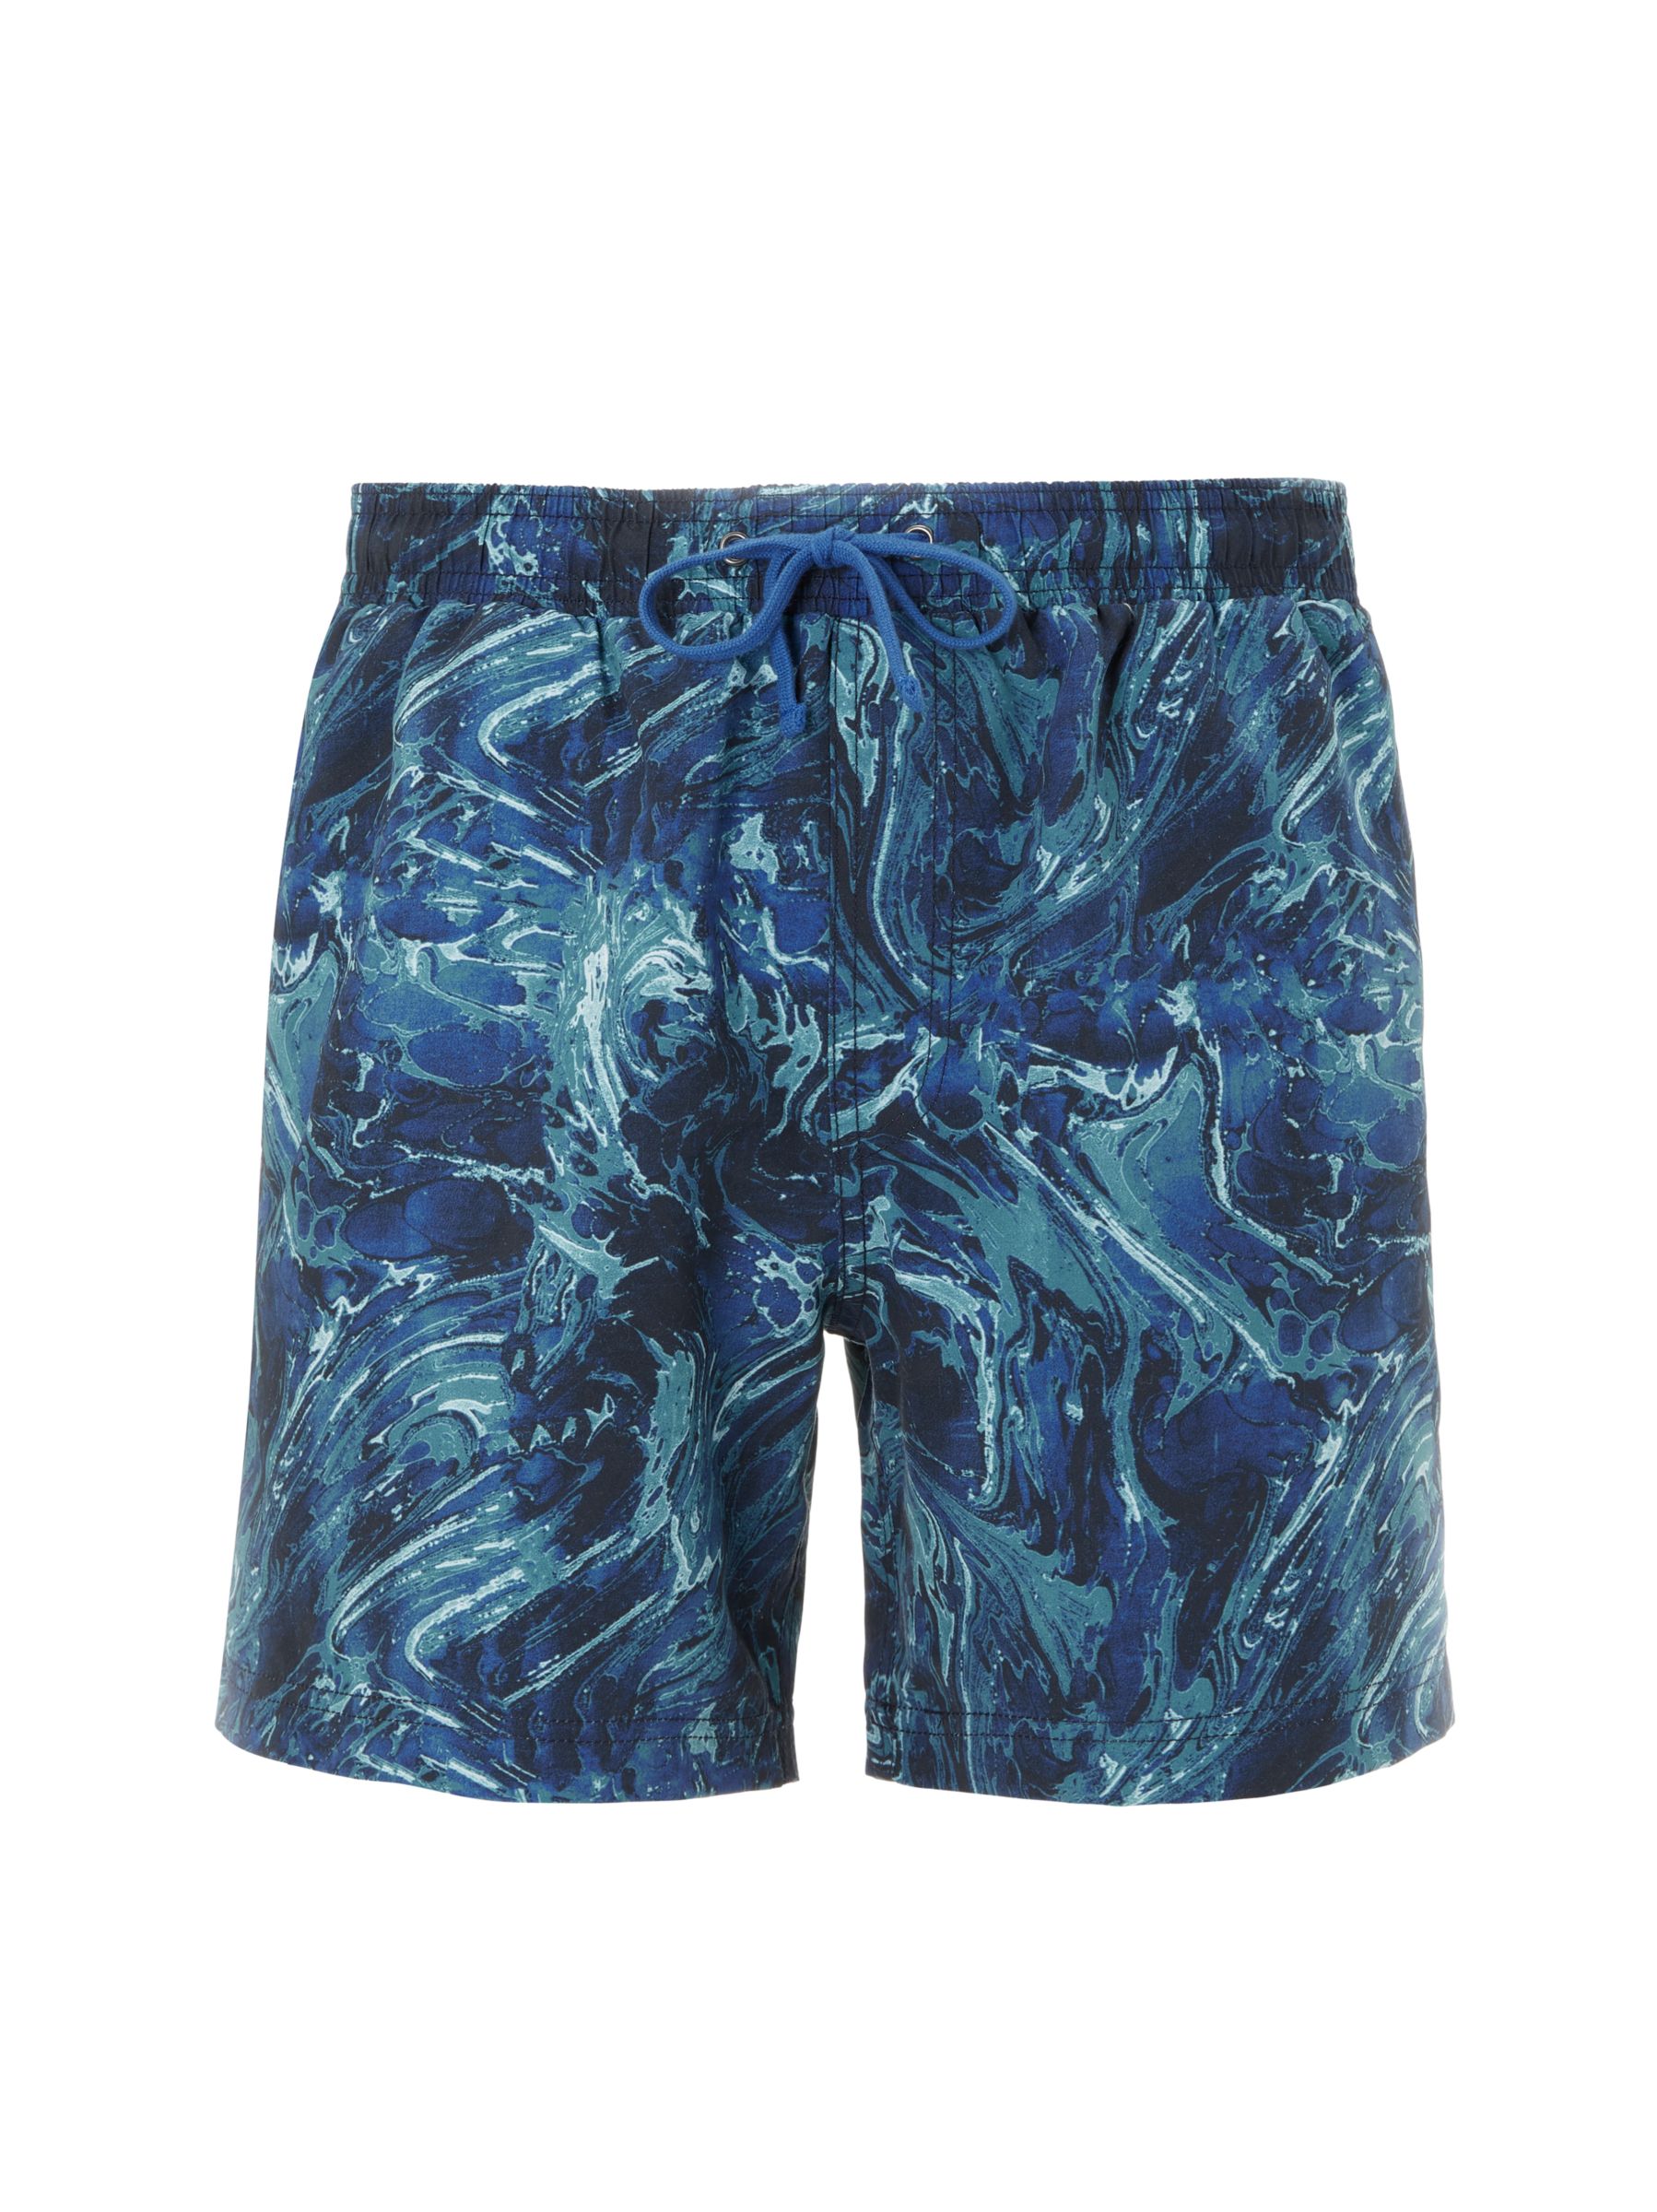 John Lewis & Partners Marble Wave Print Swim Shorts, Navy